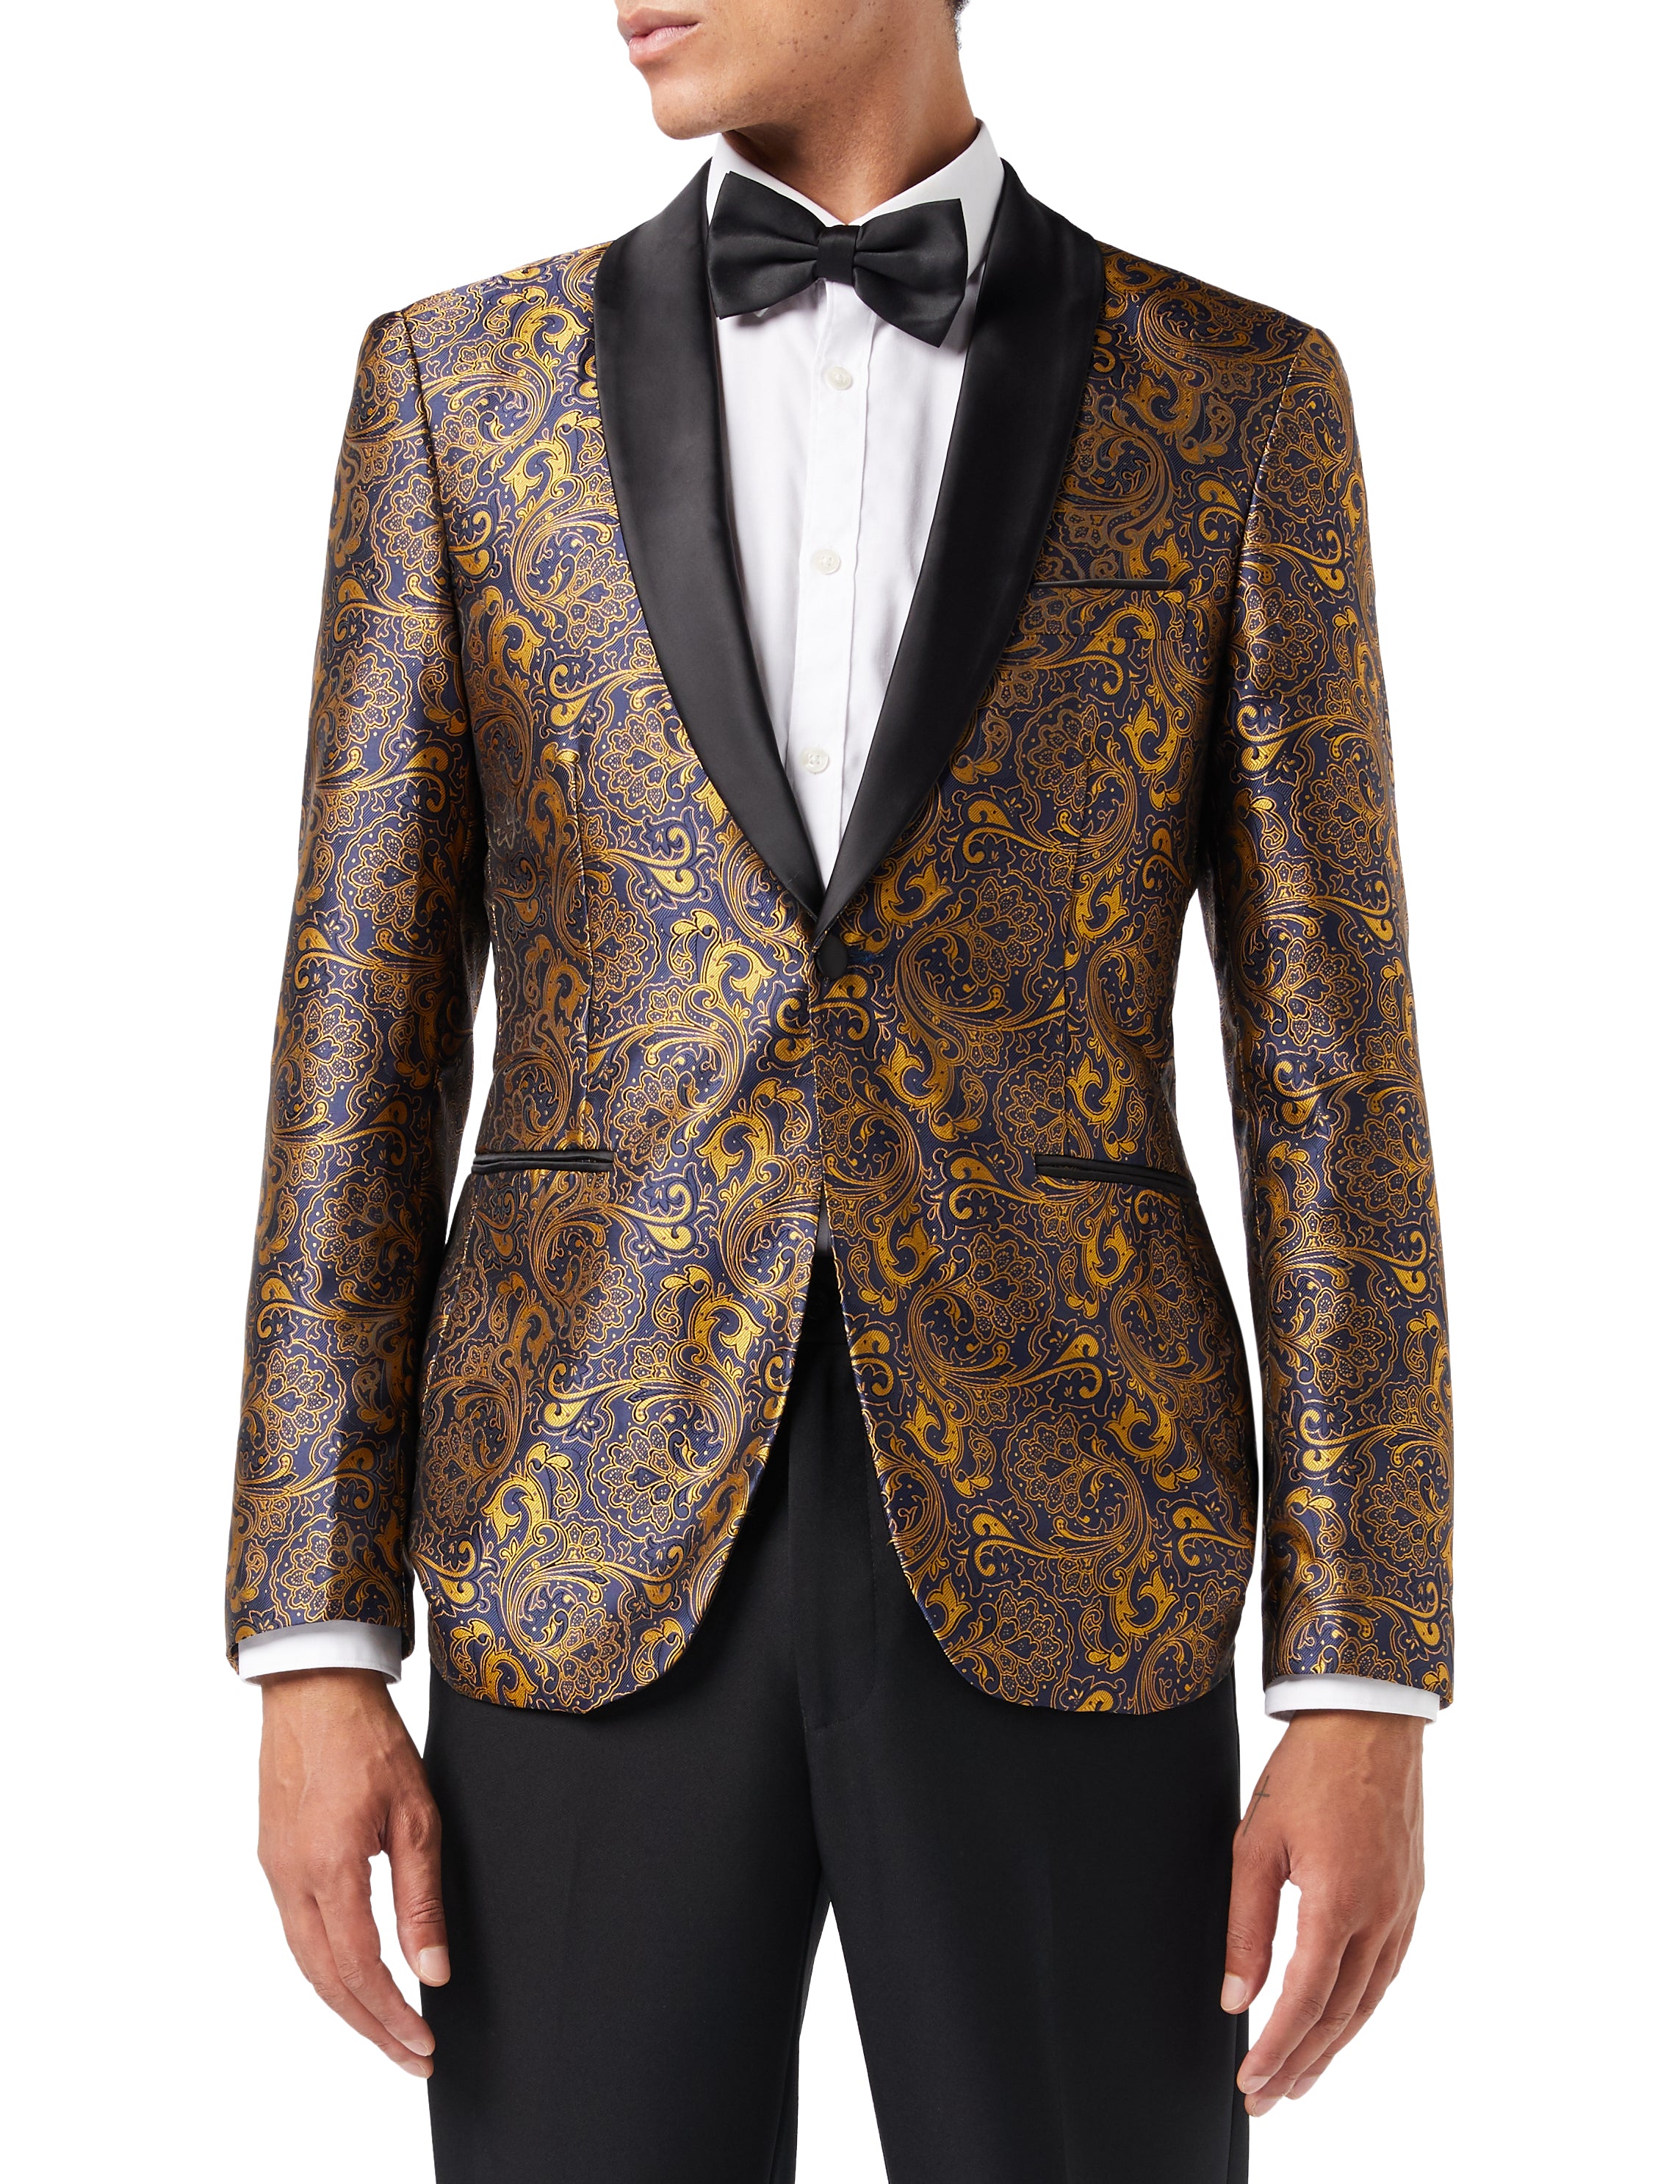 Gold Paisley Print on Navy Tuxedo Jacket